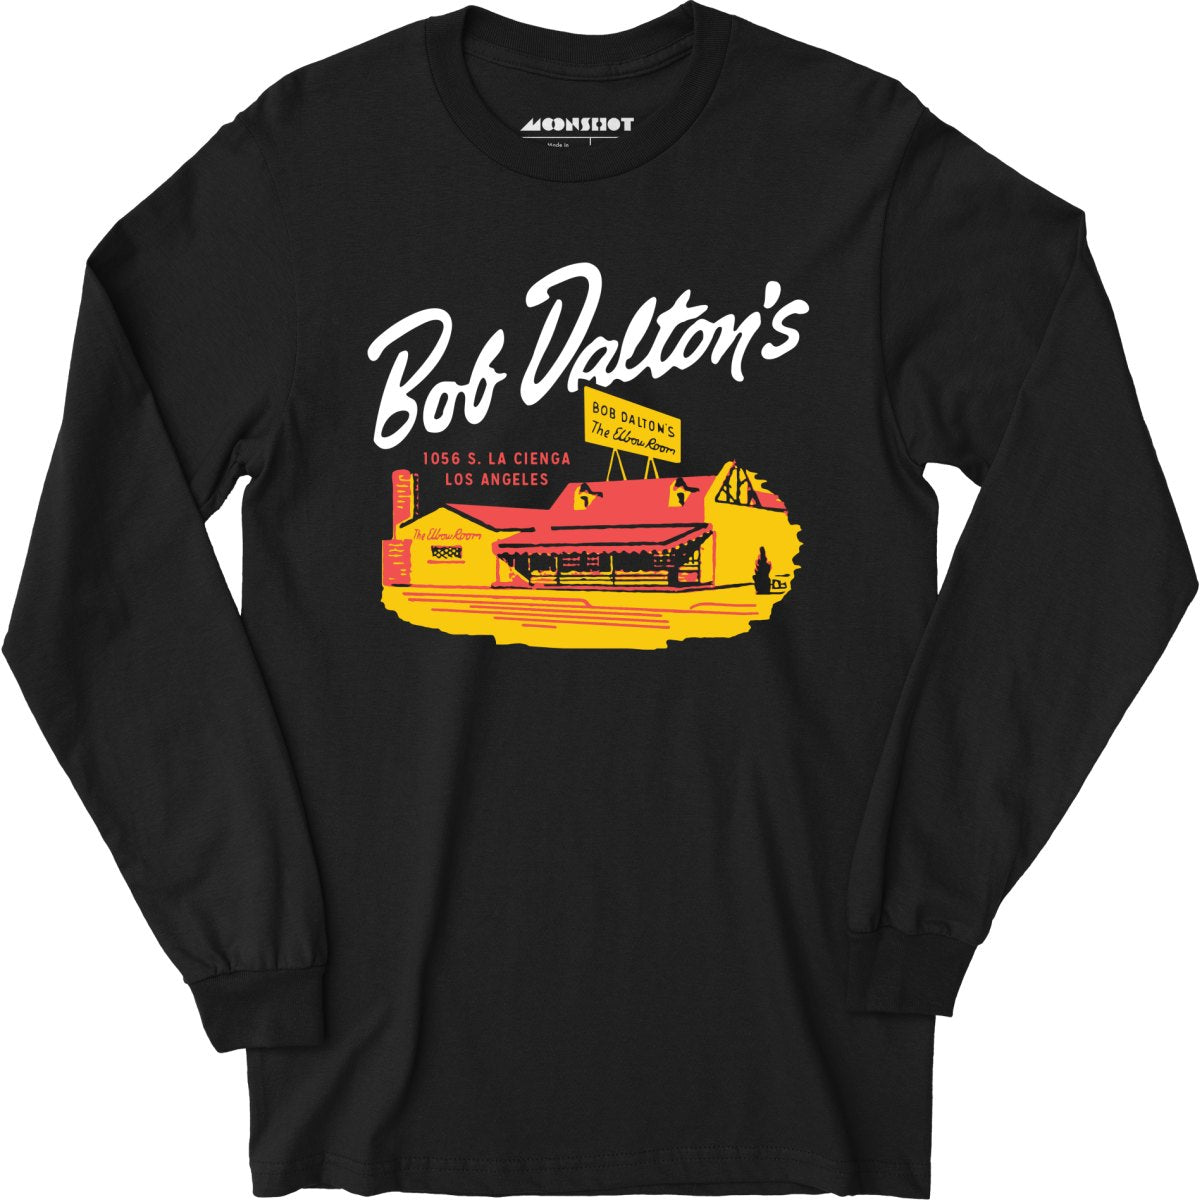 Bob Dalton's The Elbow Room - Los Angeles, CA - Vintage Restaurant - Long Sleeve T-Shirt